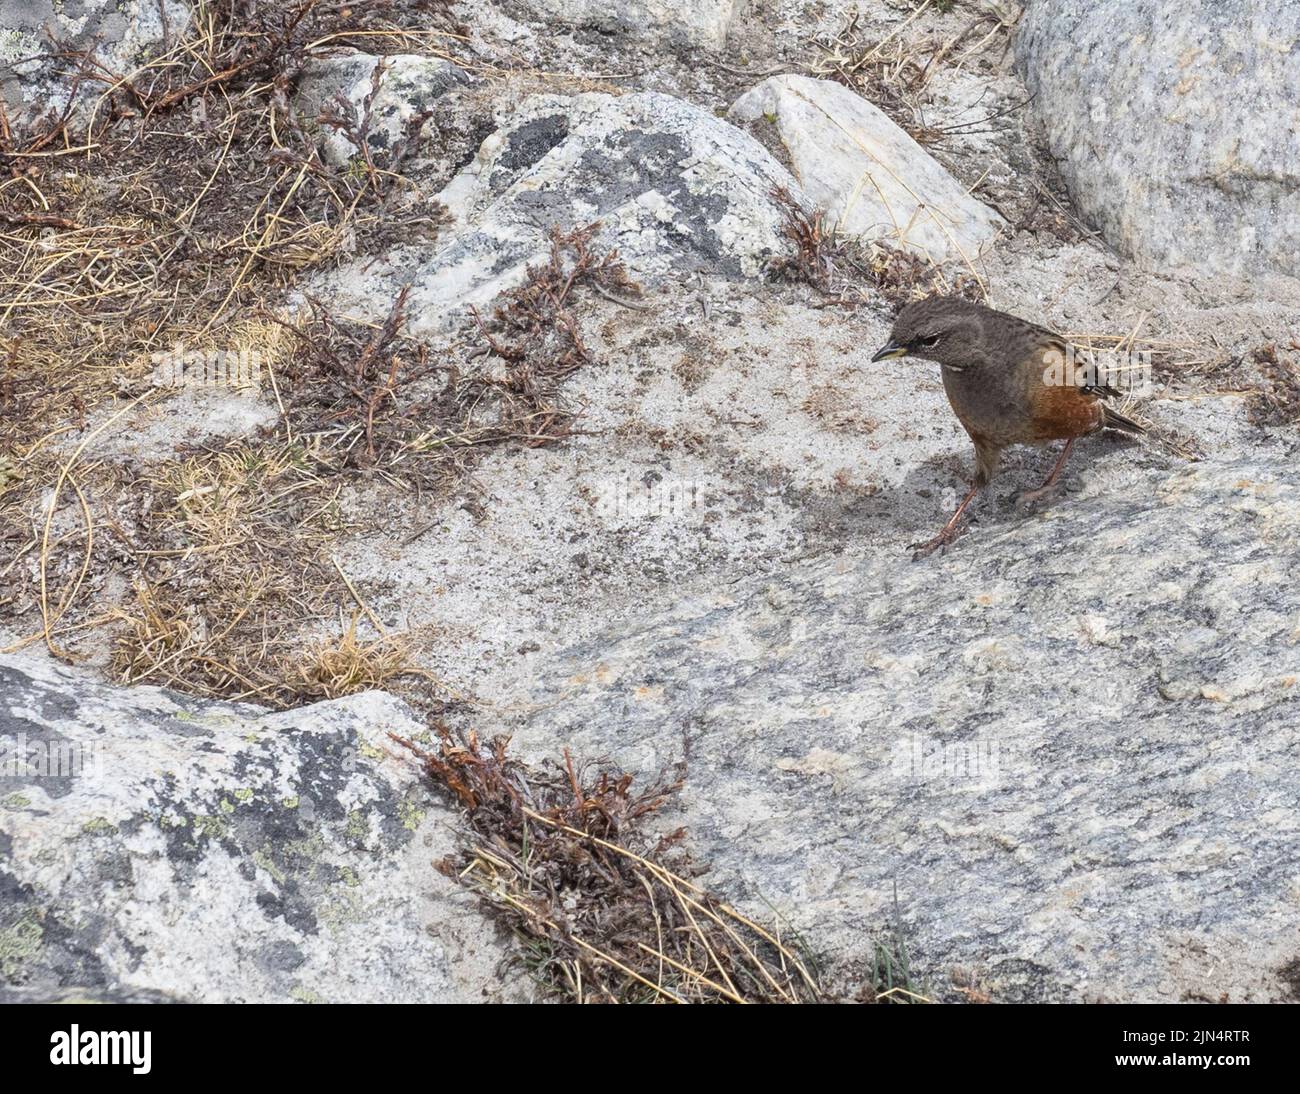 Alpine accentor (Prunella collaris)  on rocky ground, Lobuche, Khumbu Stock Photo